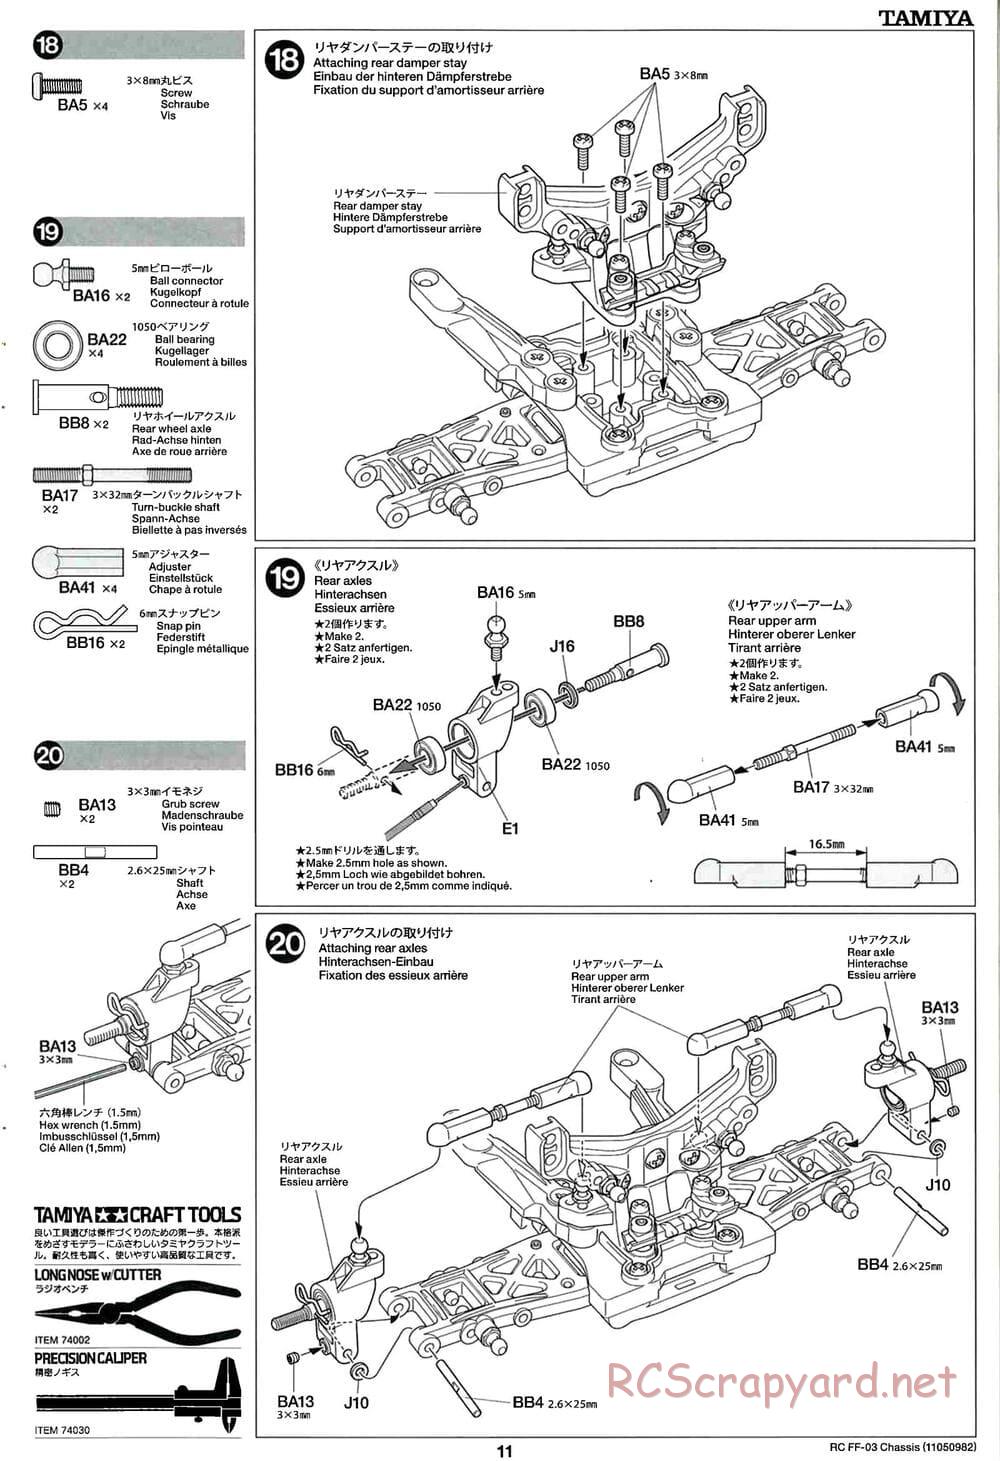 Tamiya - FF-03 Chassis - Manual - Page 11